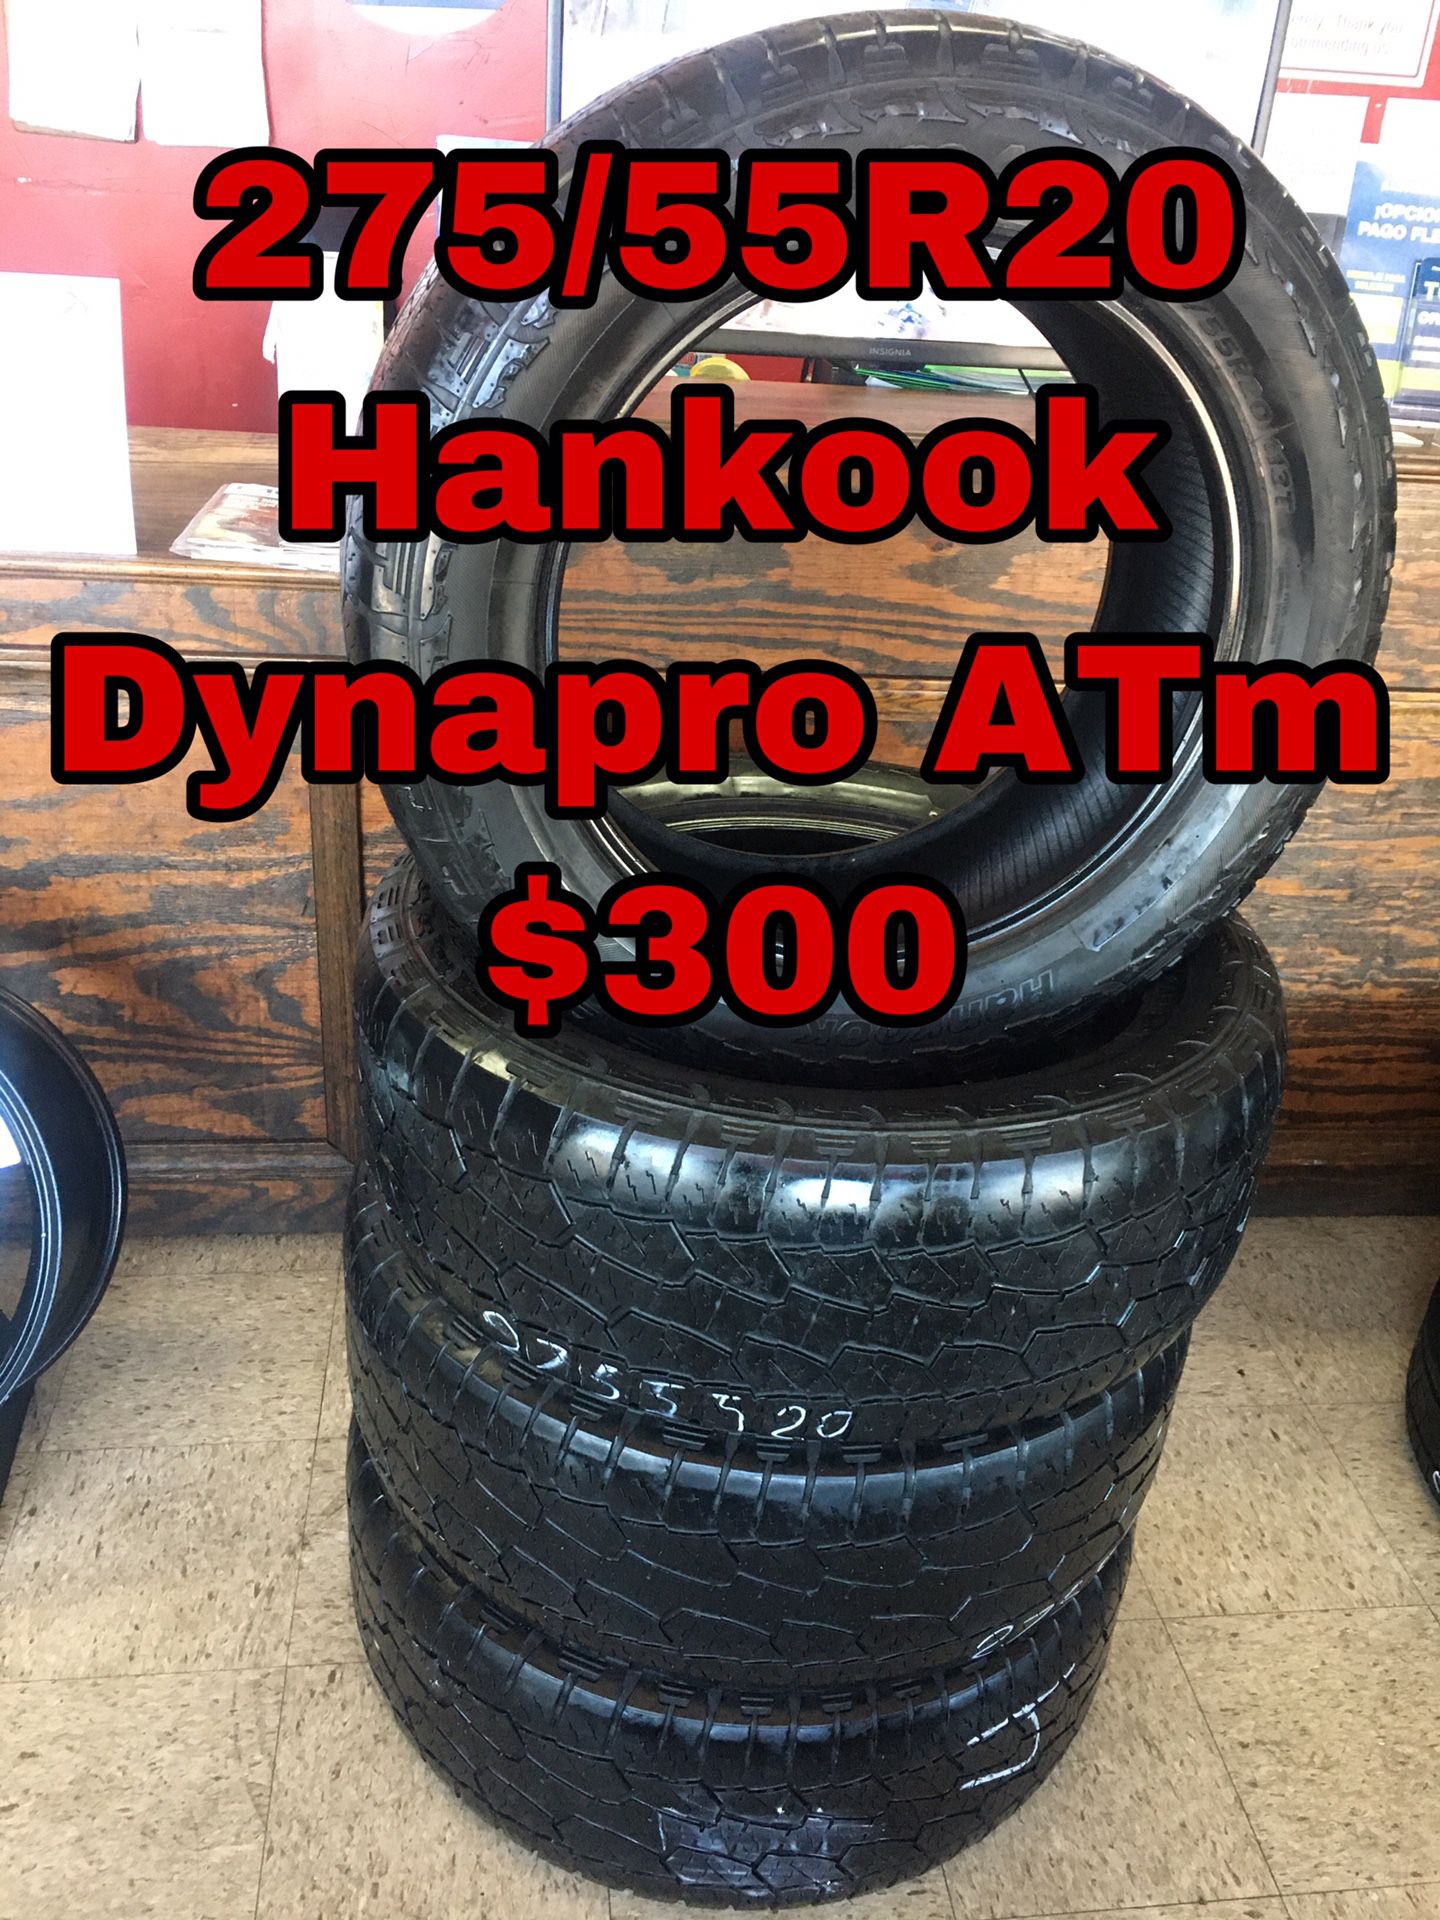 275/55R20 Hankook Dynapro ATm 